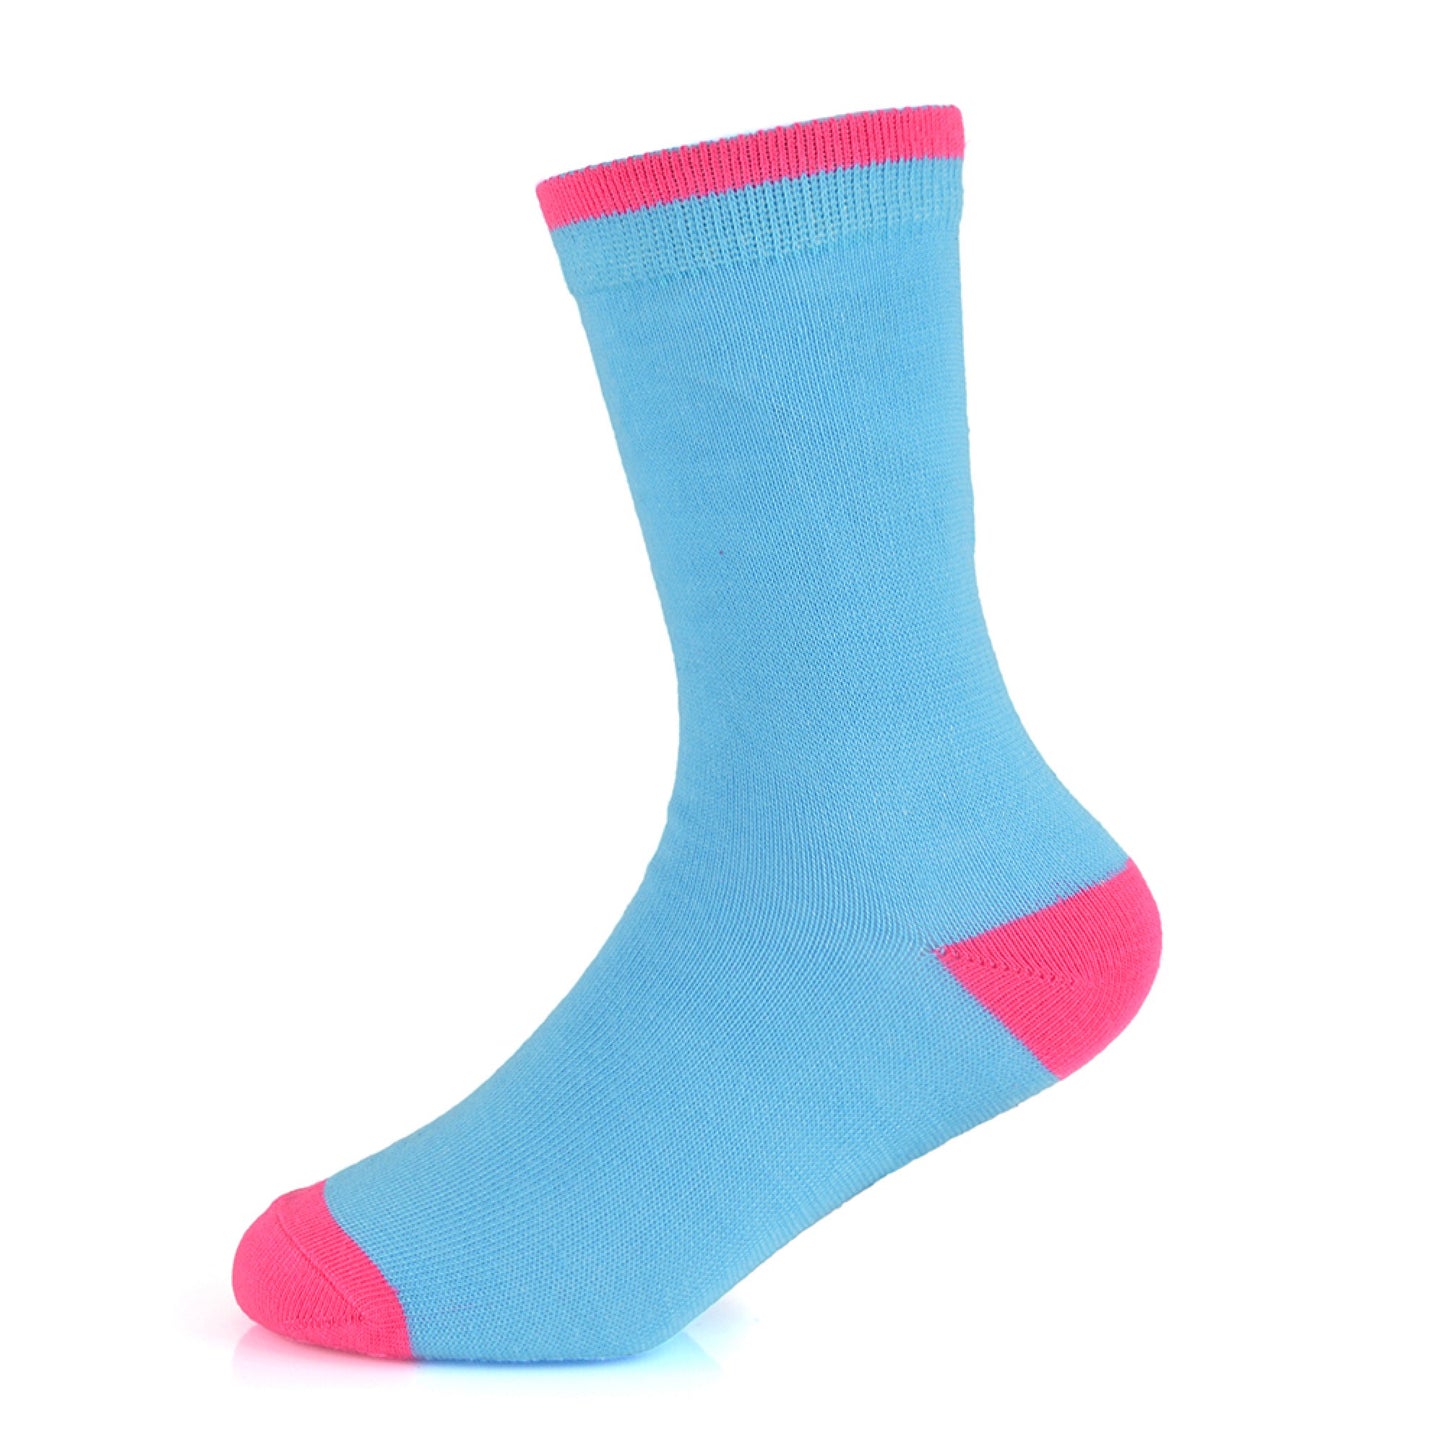 6 Pairs Girls Multicoloured Unicorn Patterned Ankle Socks